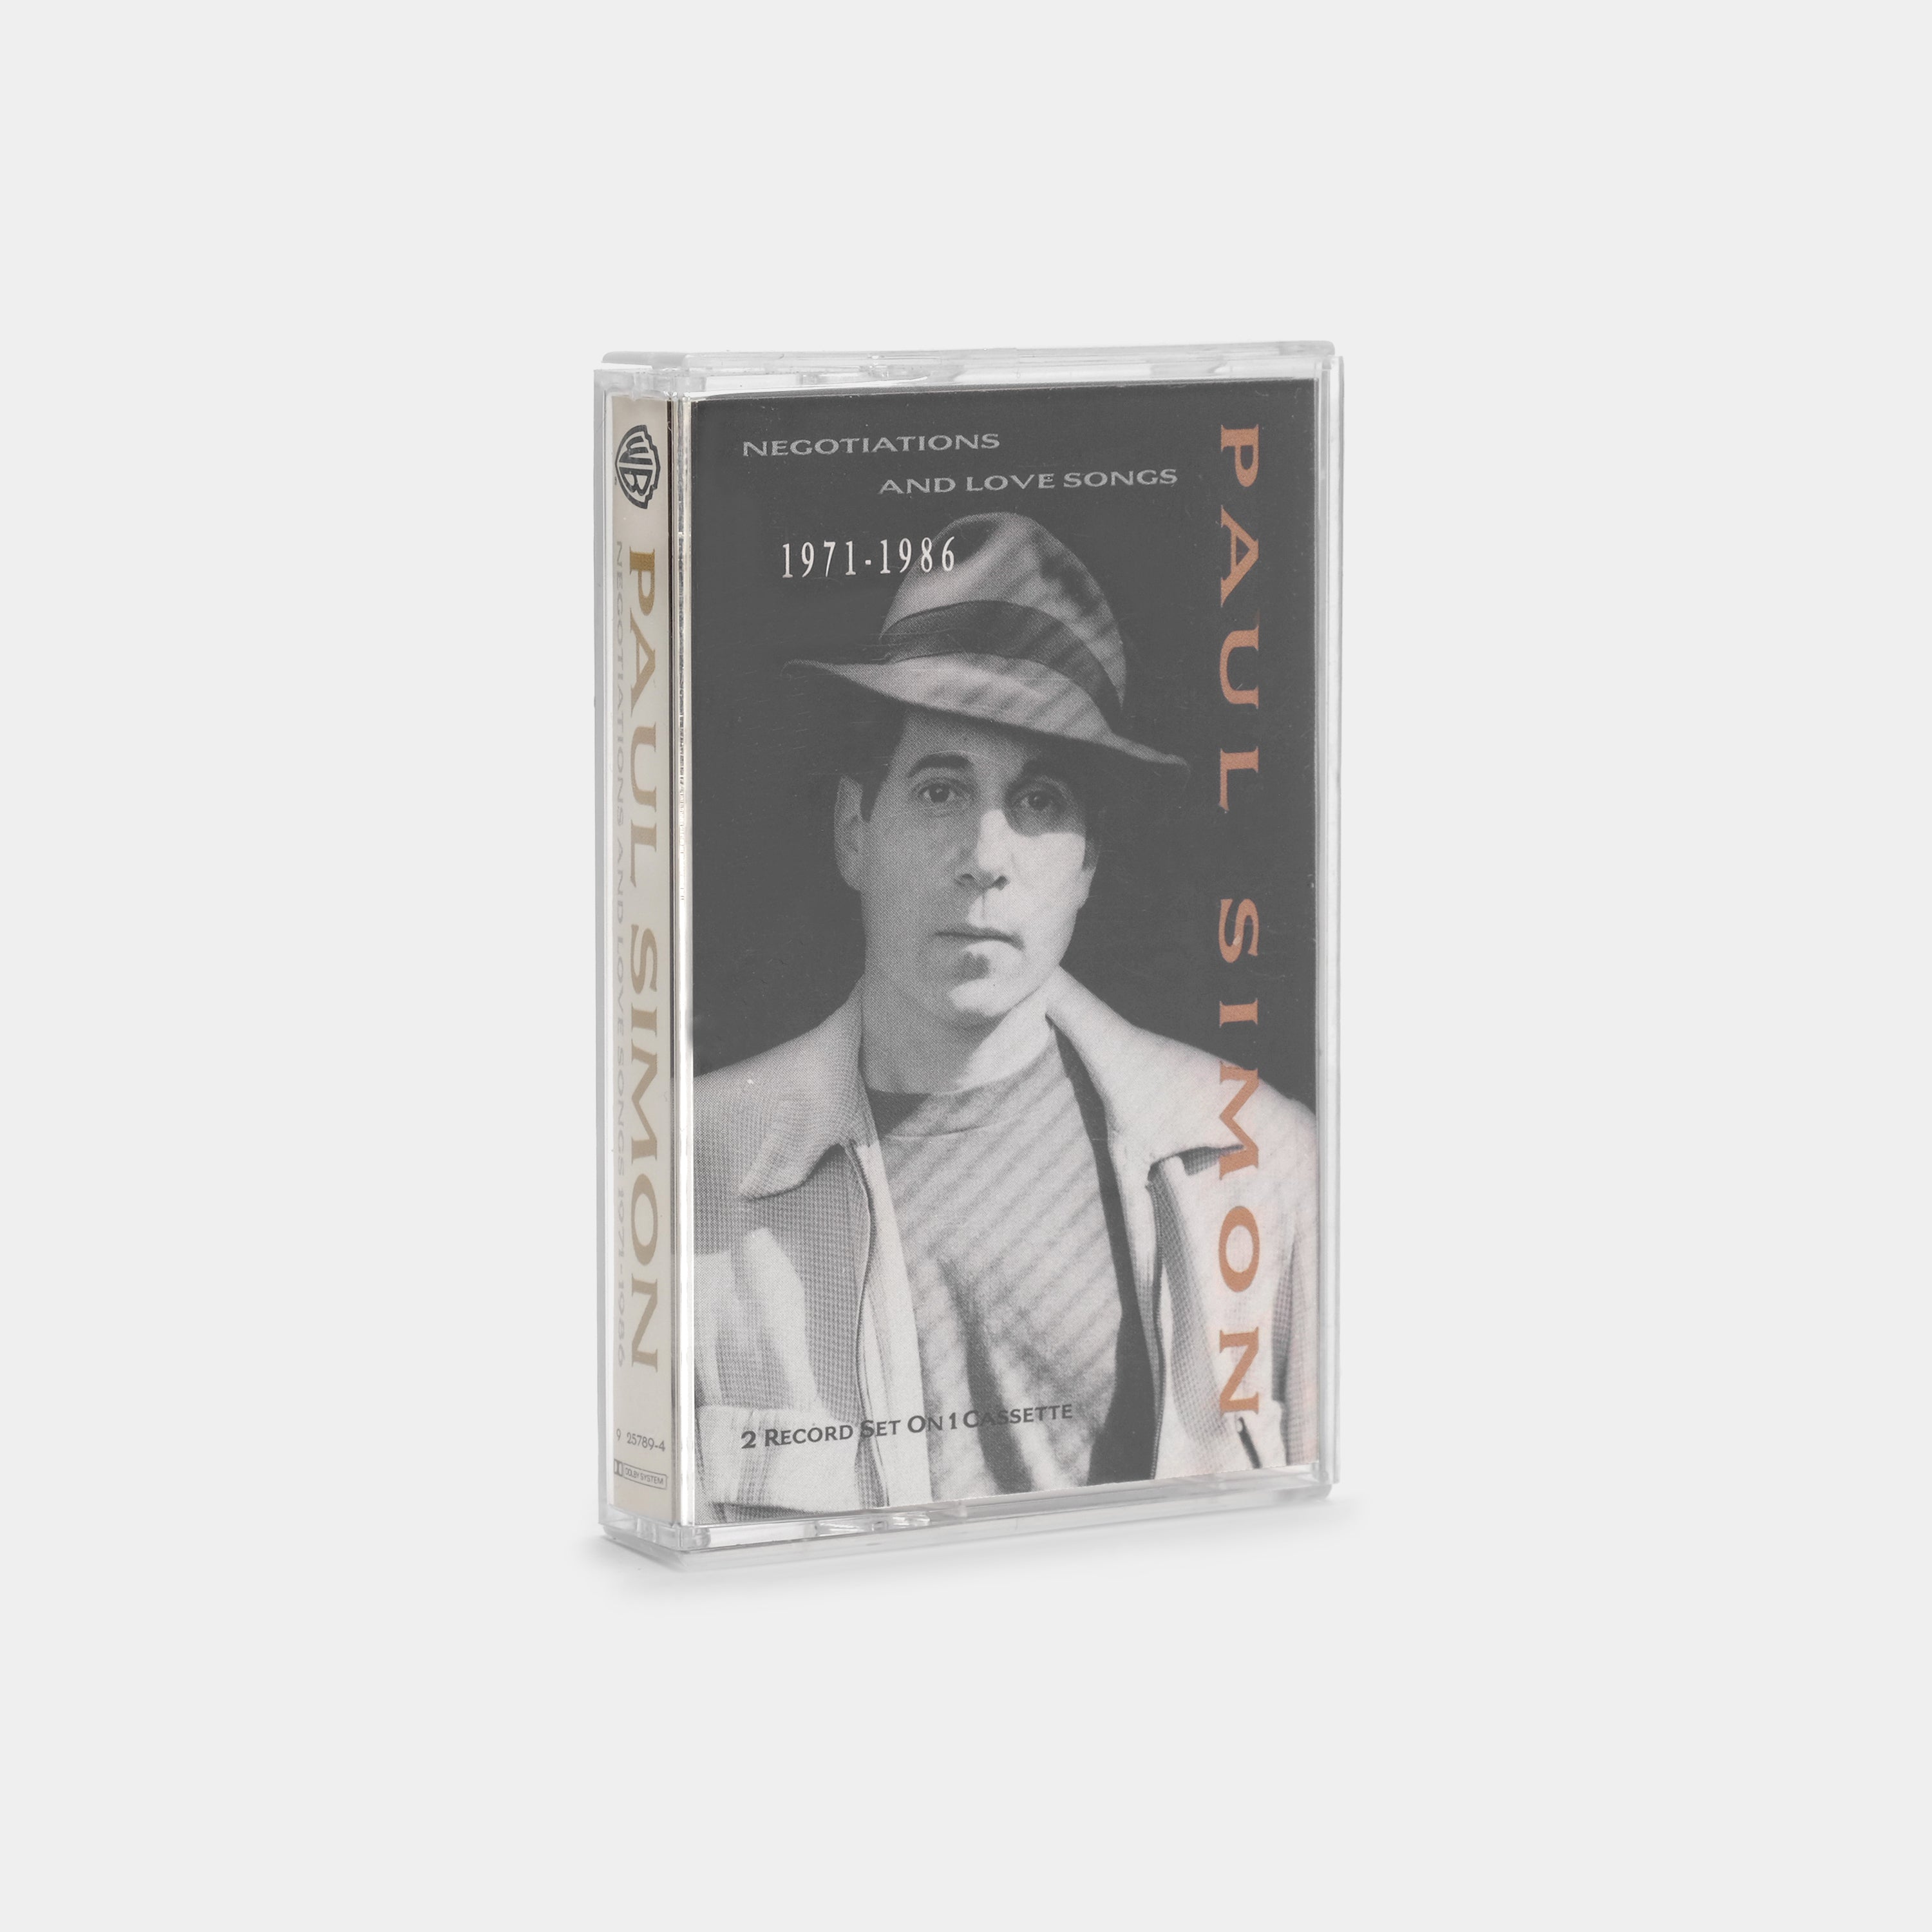 Paul Simon - Negotiations And Love Songs 1971-1986 Cassette Tape